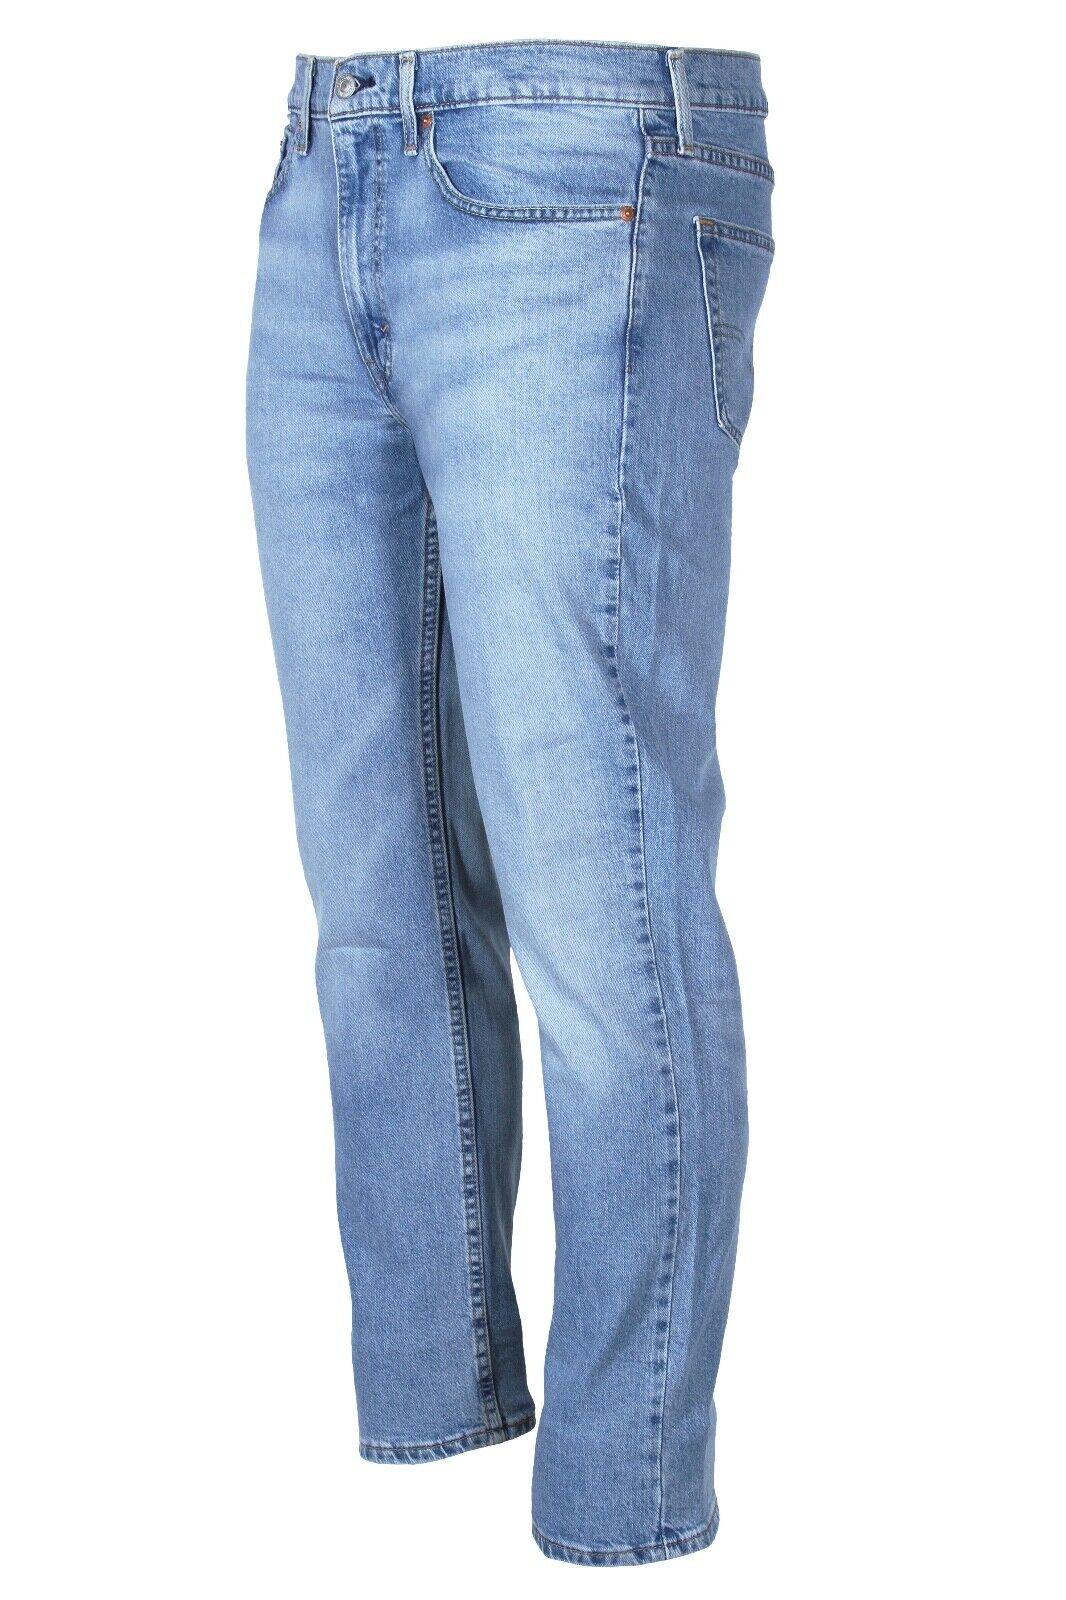 Levi’s 511 Slim Fit Men's Jeans Wash: Dolf Make It Adv Style# 04511-5127